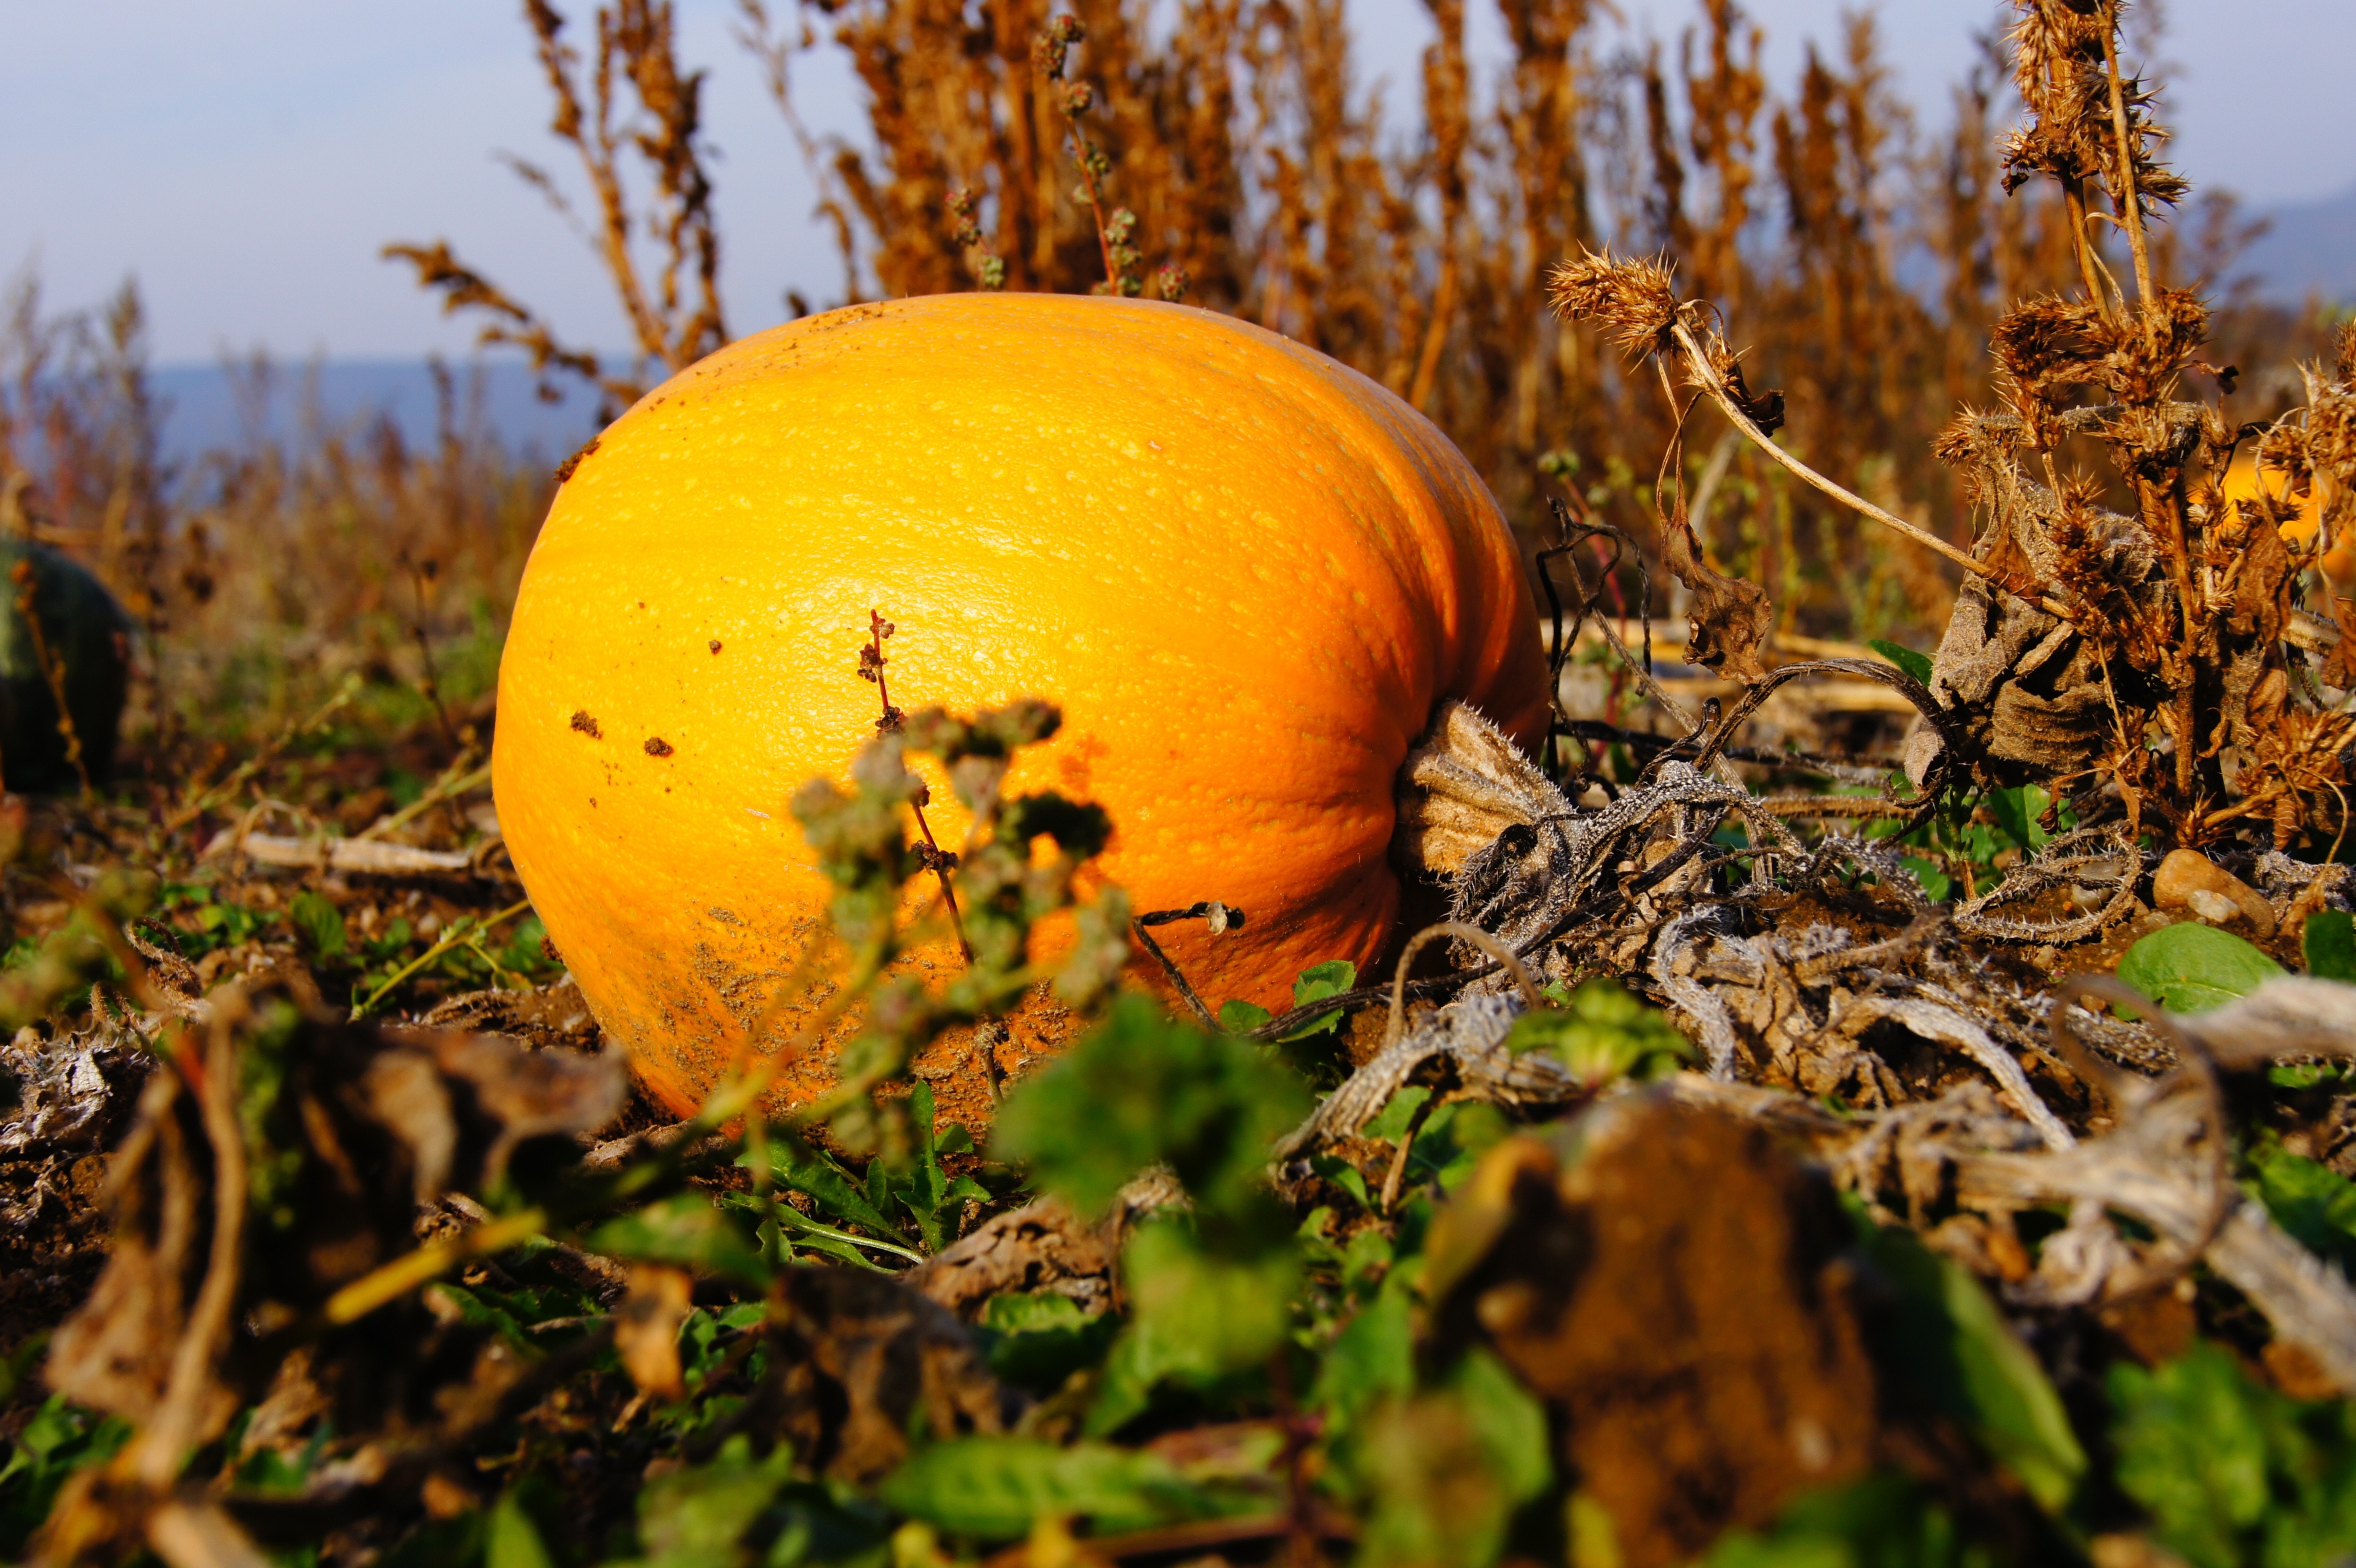 Vegetables, Pumpkin, Halloween, Autumn, food and drink, fruit